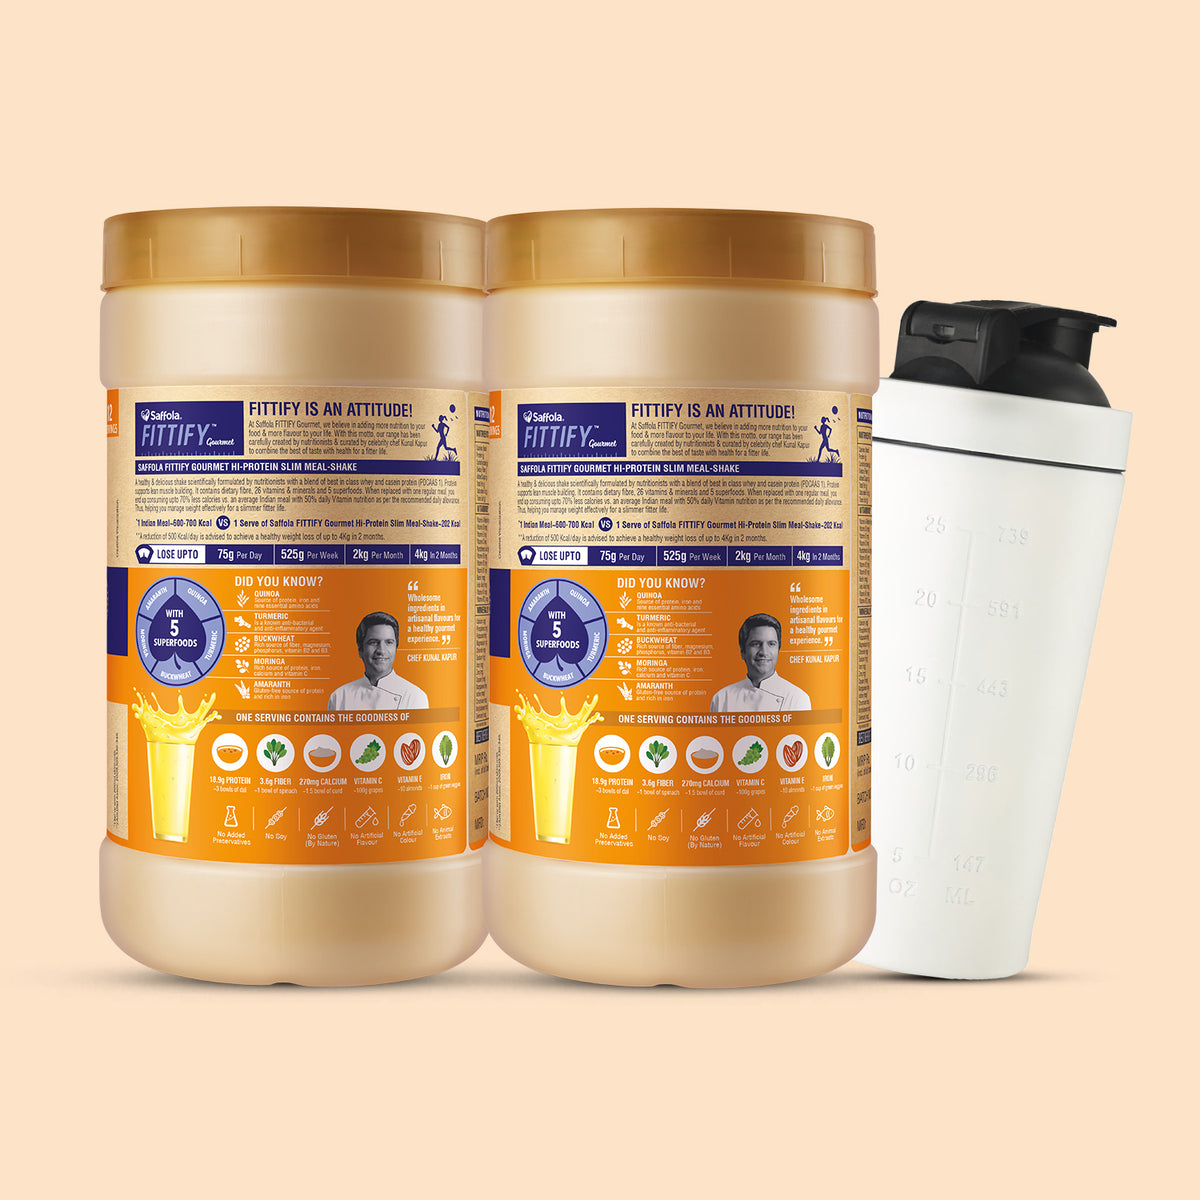 Saffola Fittify Hi-Protein Slim Meal Shake Royal Kesar Pista BOGO + Metal White Shaker 700ml Combo